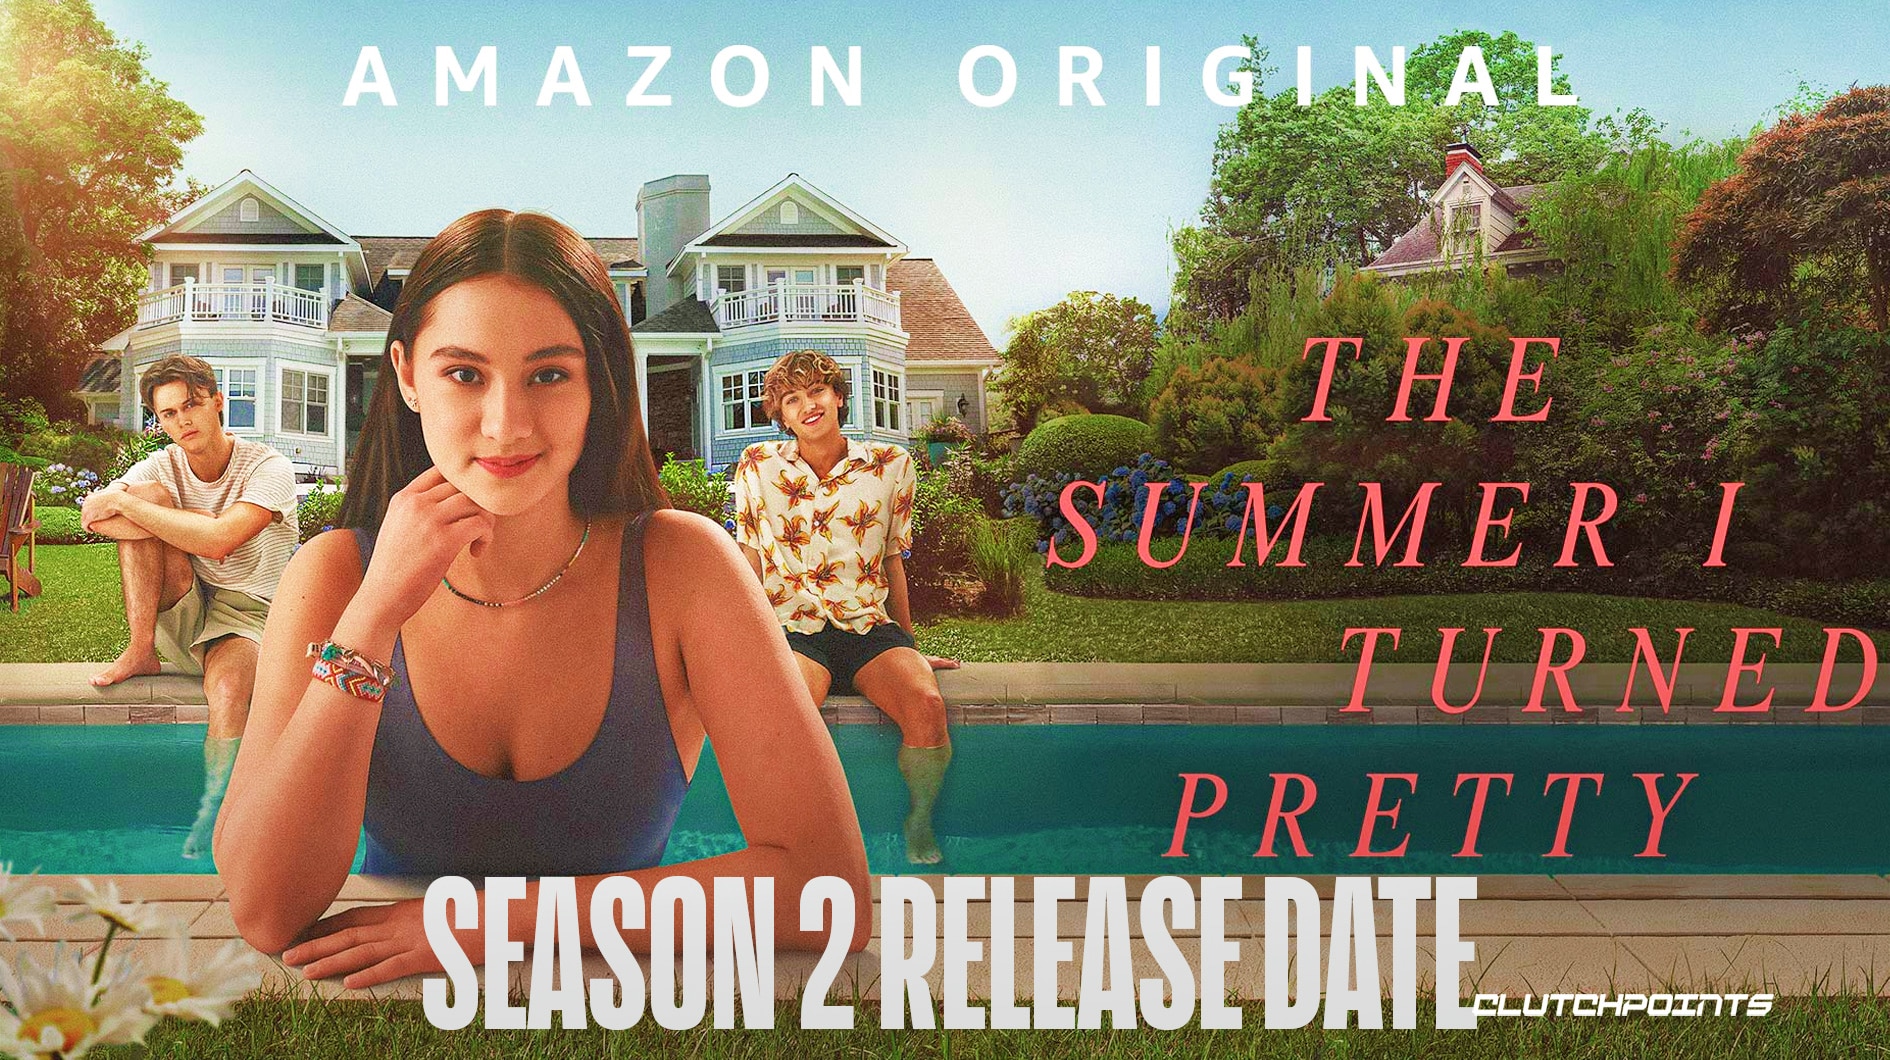 The Summer I Turned Pretty season 2 release date, revealed